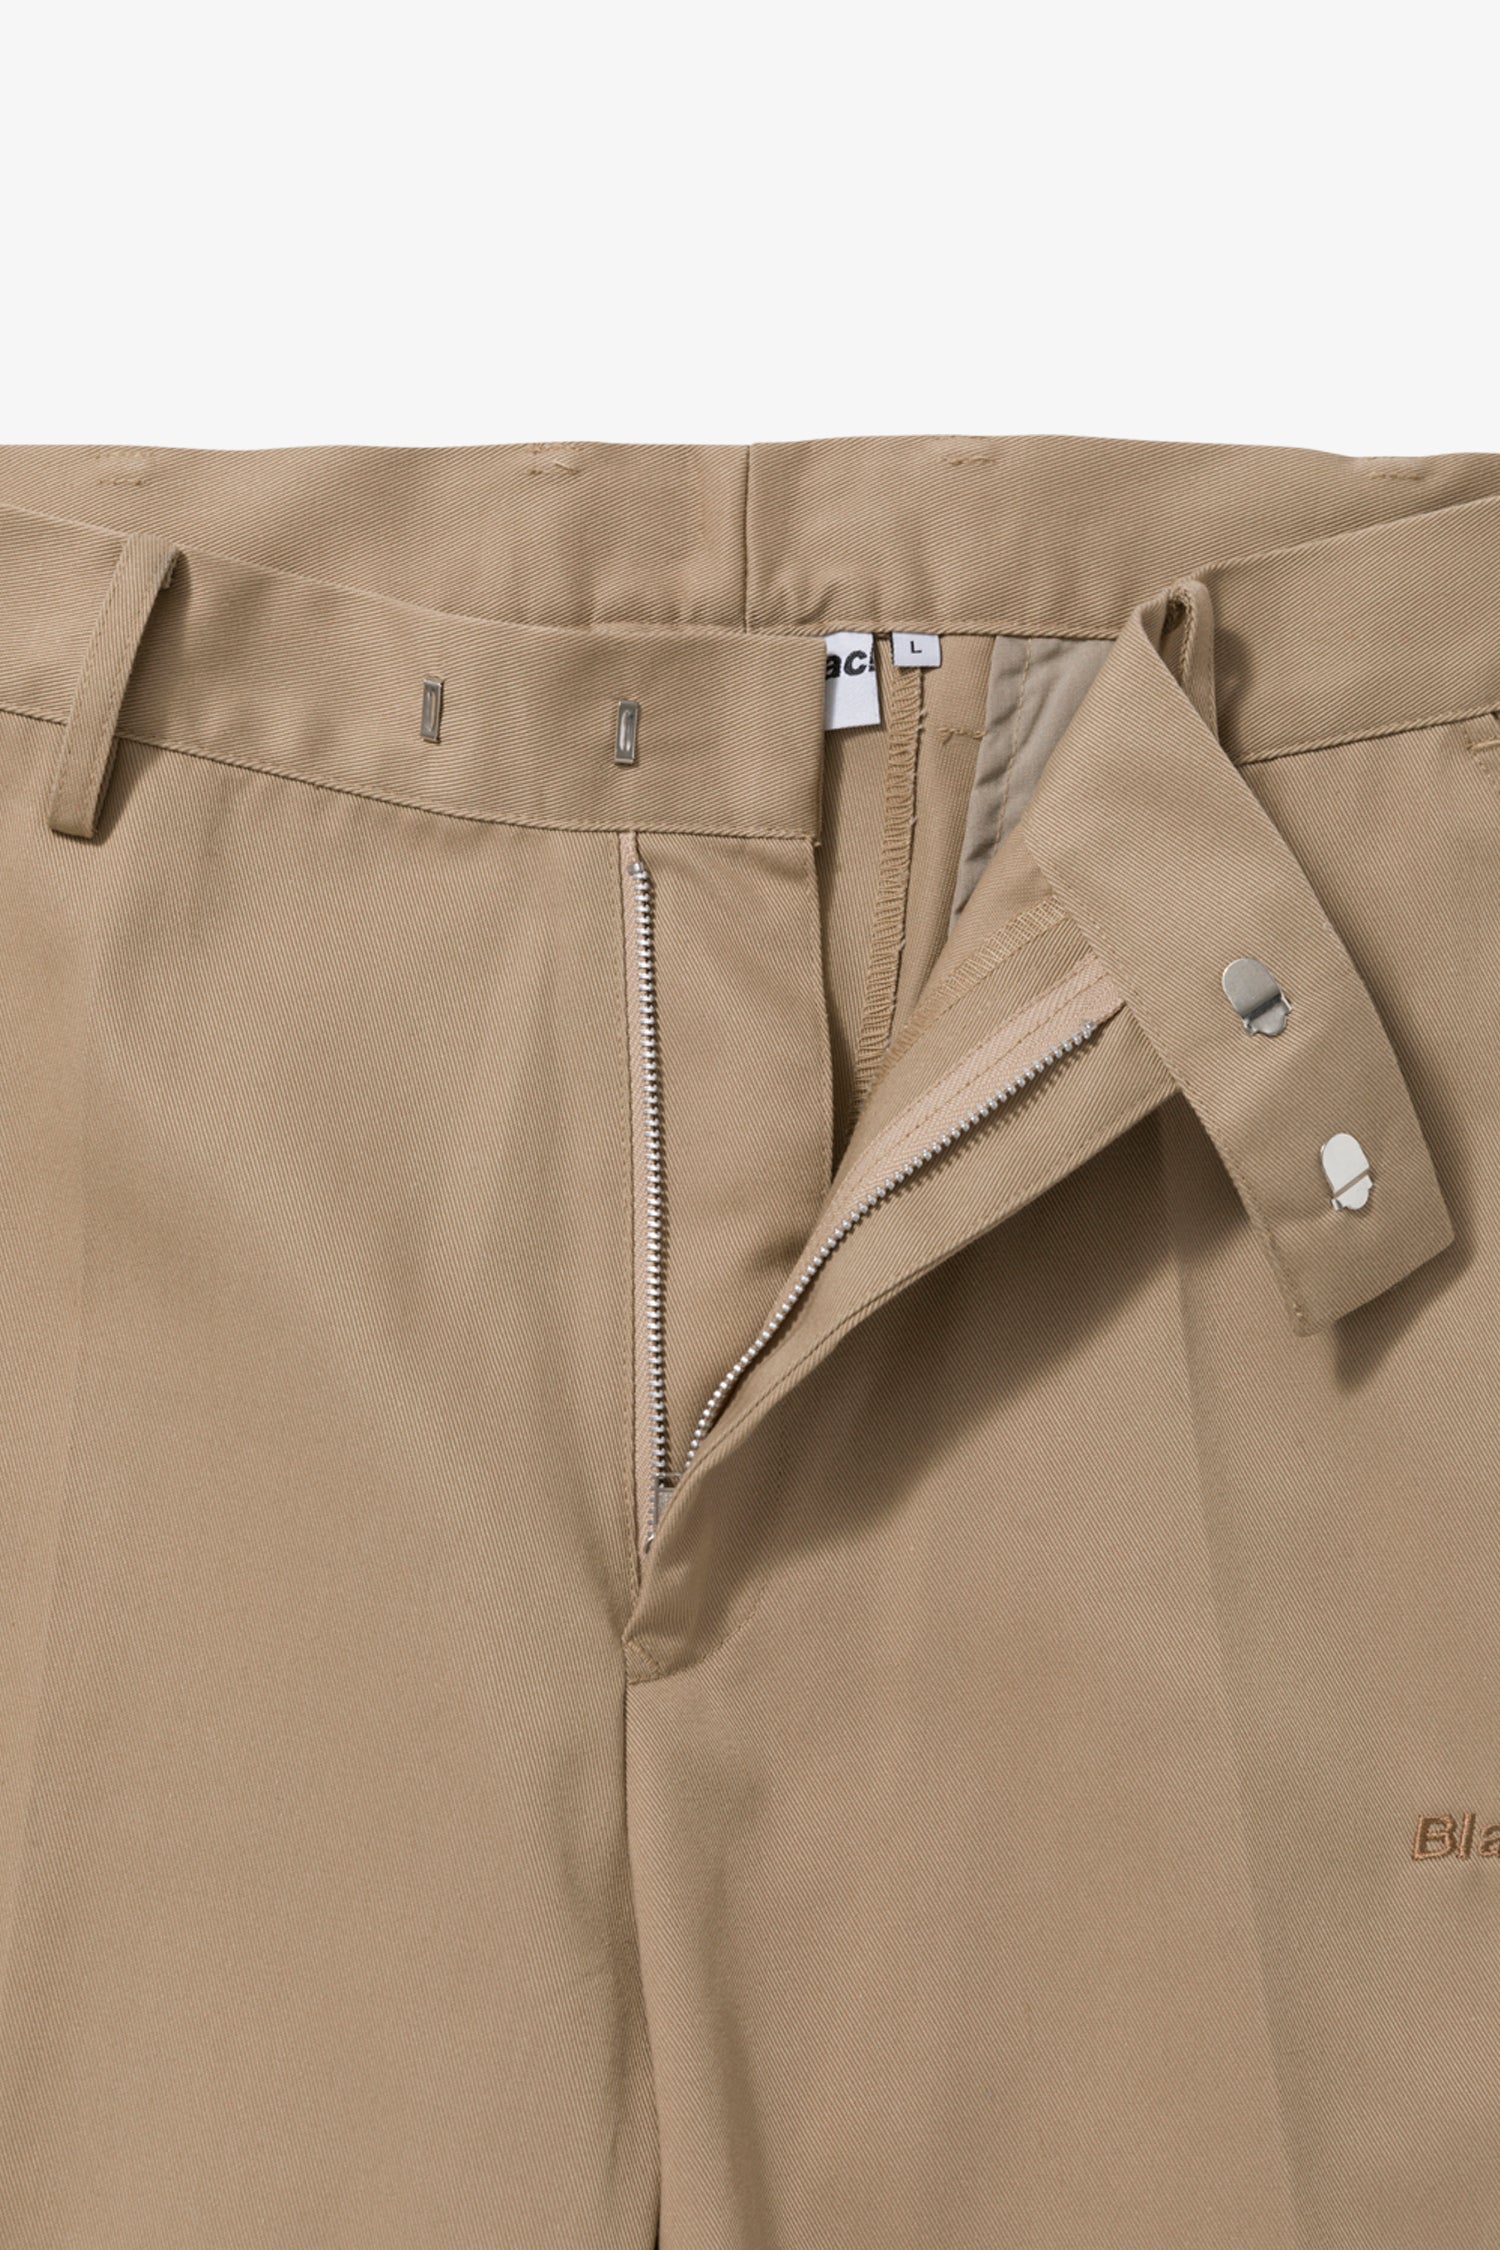 Selectshop FRAME - BLACKEYEPATCH Tailored Pants By sulvam Bottoms Dubai